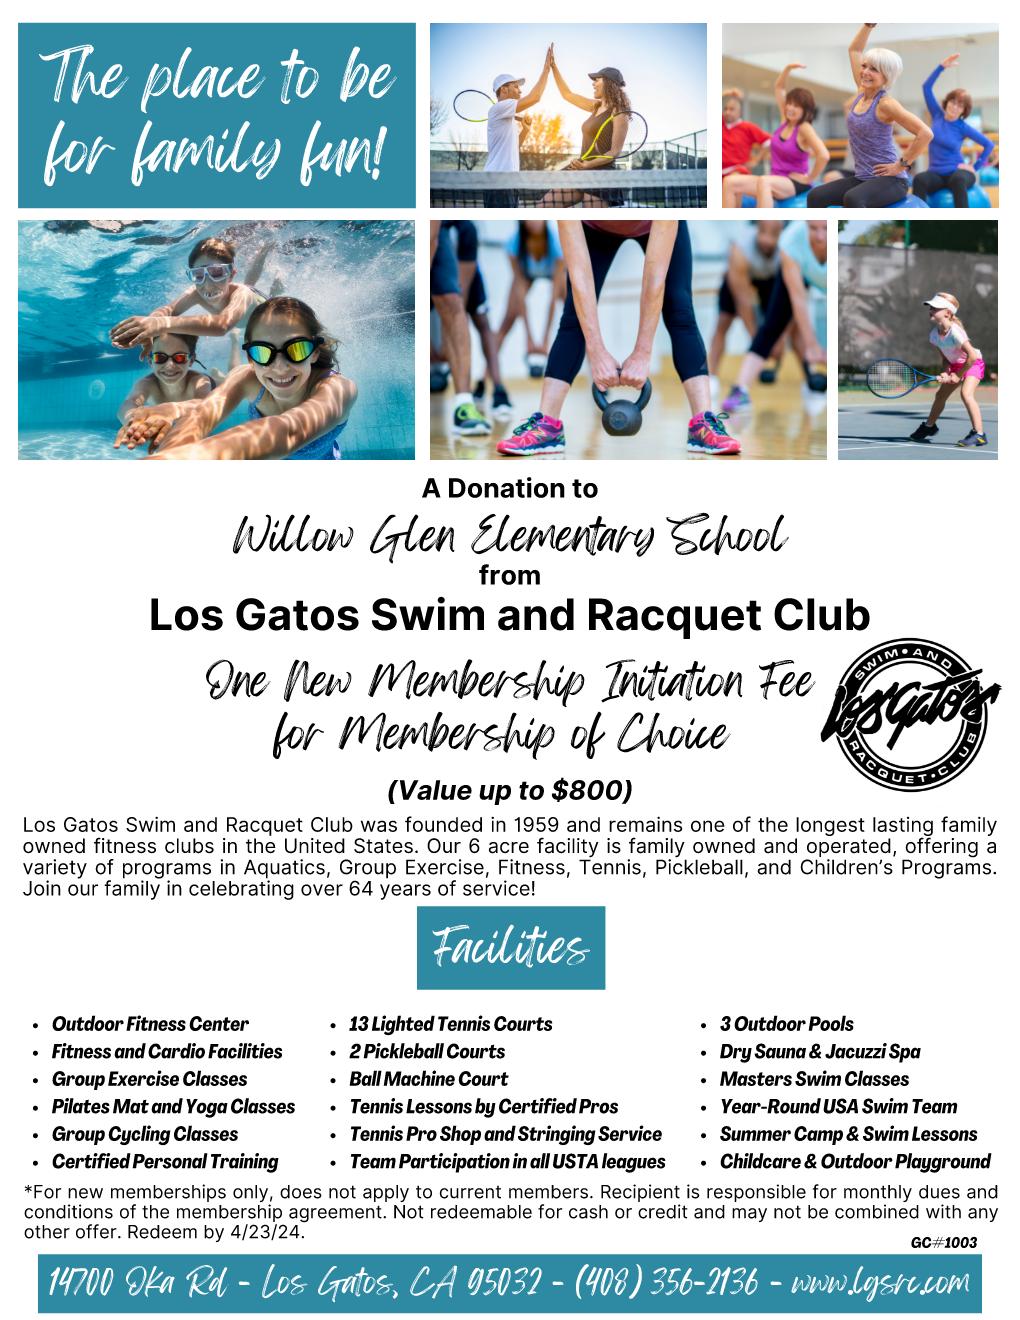 Los Gatos Swim and Racquet Club - one New Membership Initiation Fee